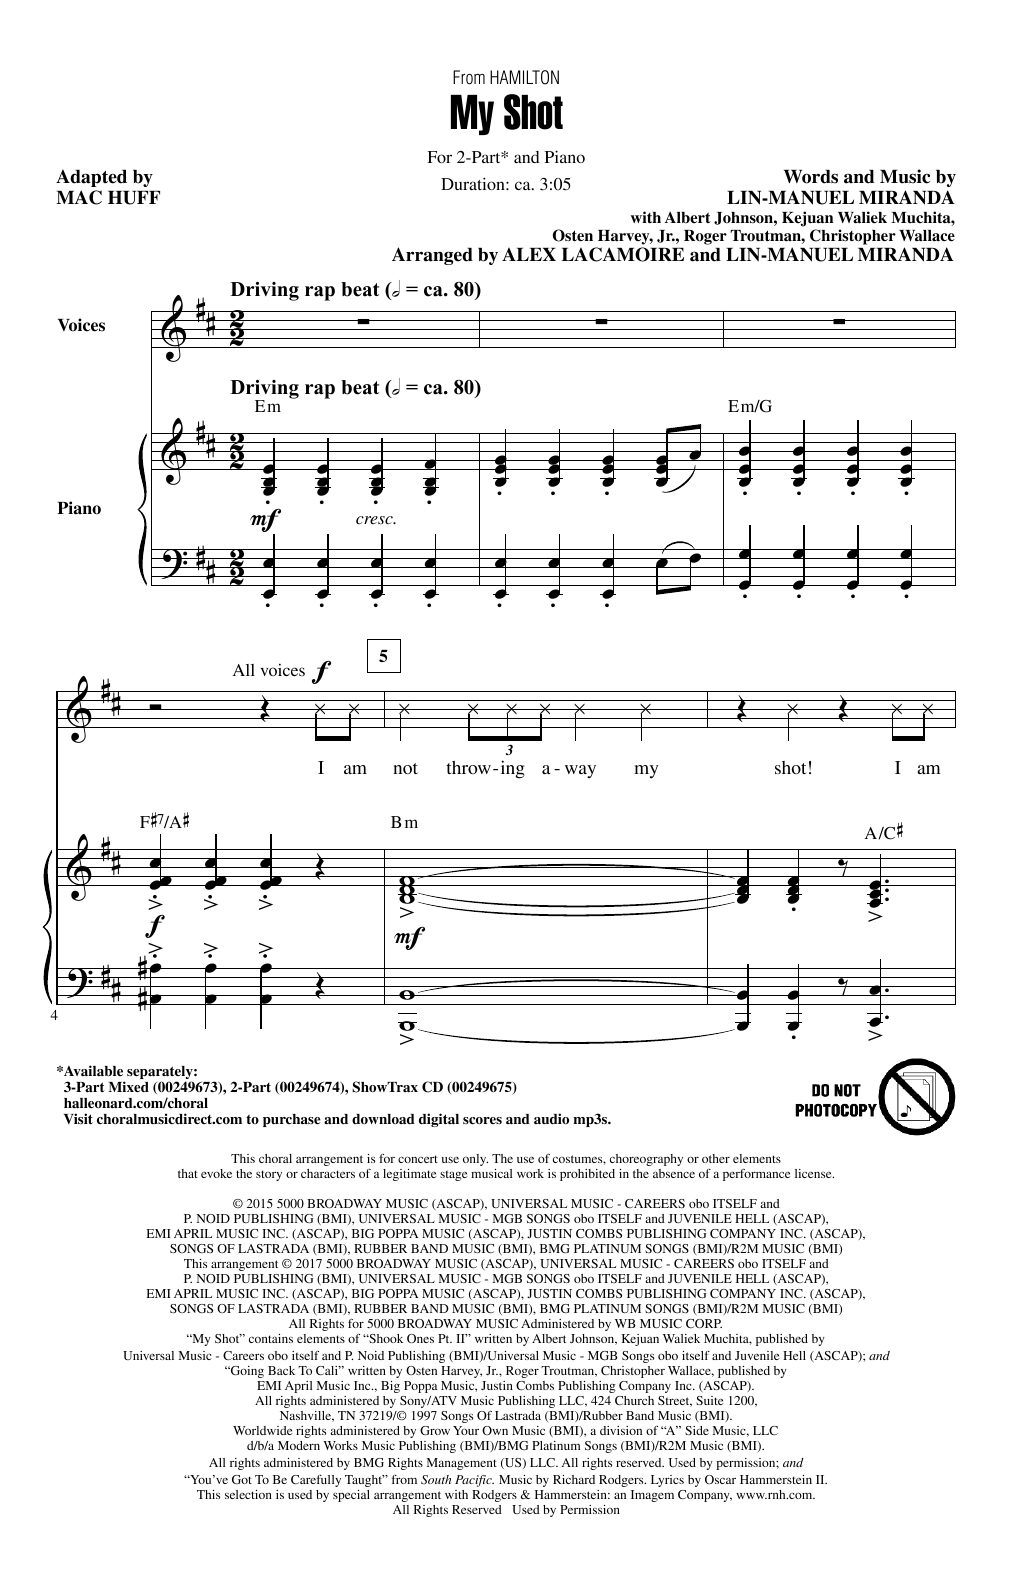 Lin-Manuel Miranda My Shot (from Hamilton) (arr. Mac Huff) Sheet Music Notes & Chords for 2-Part Choir - Download or Print PDF